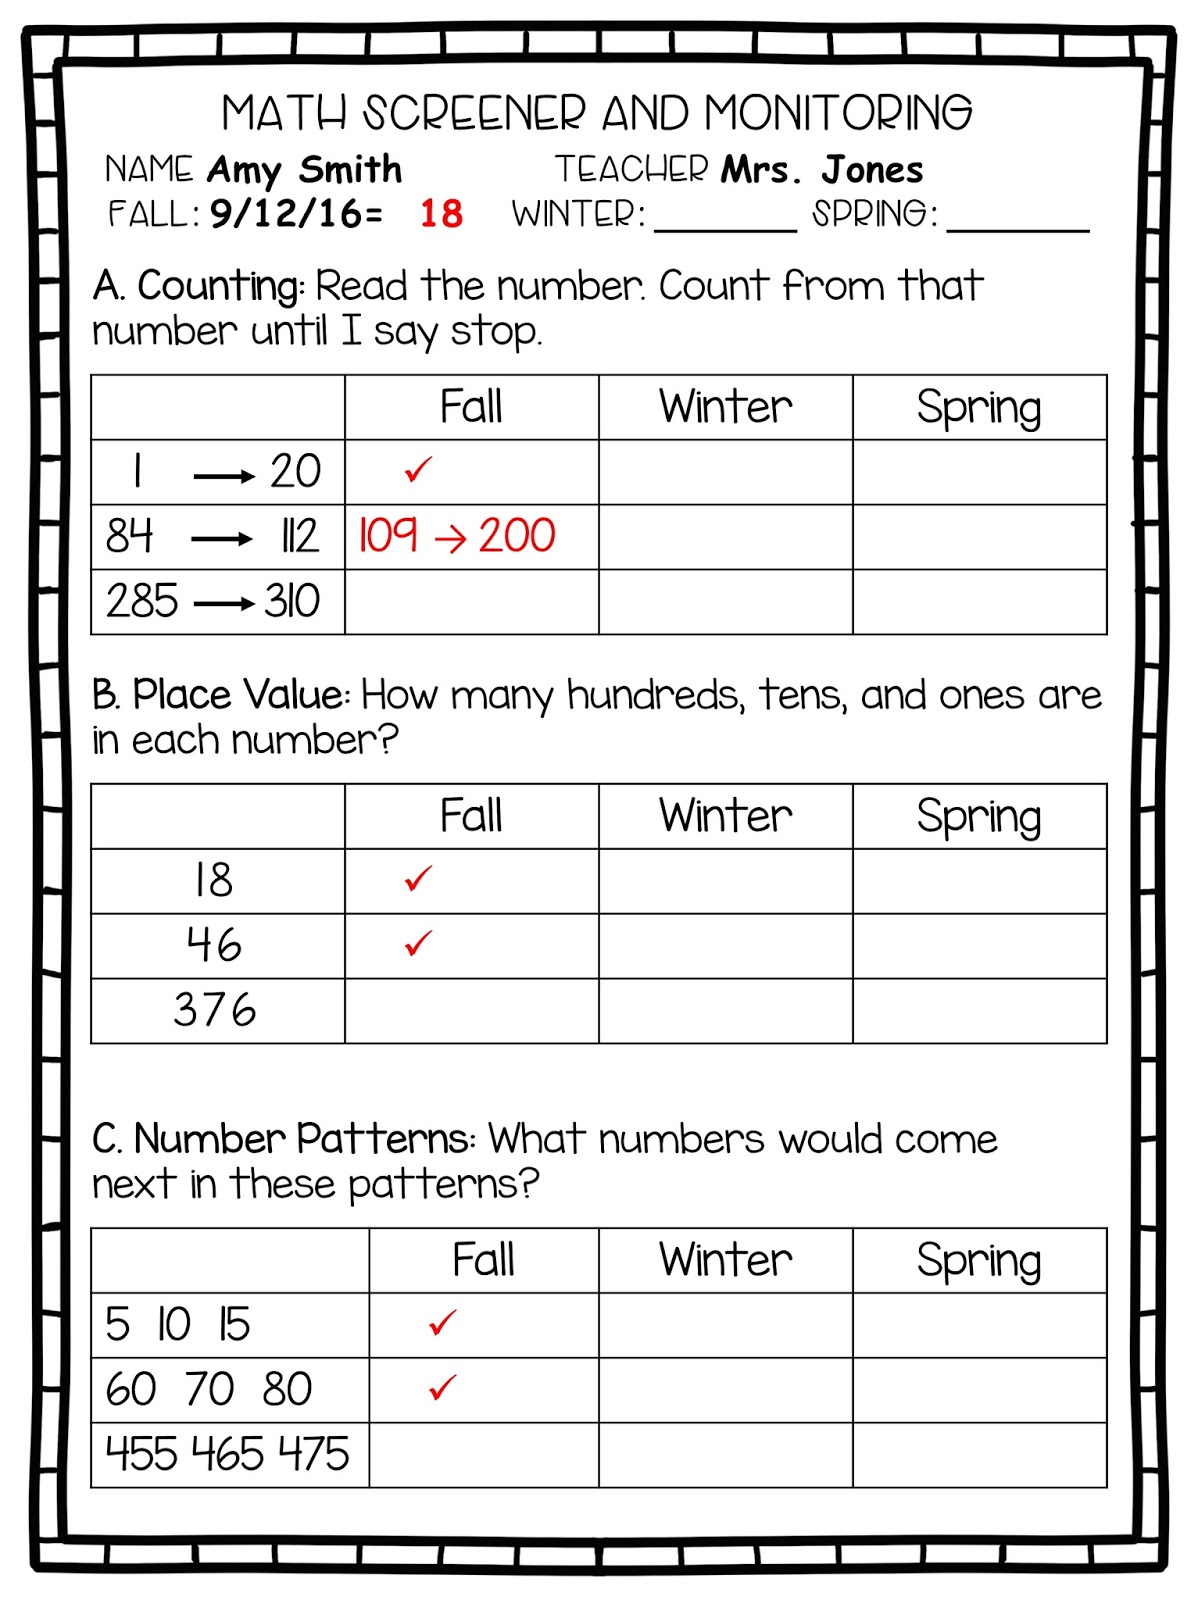 2nd-grade-snickerdoodles-basic-math-assessment-free-editable